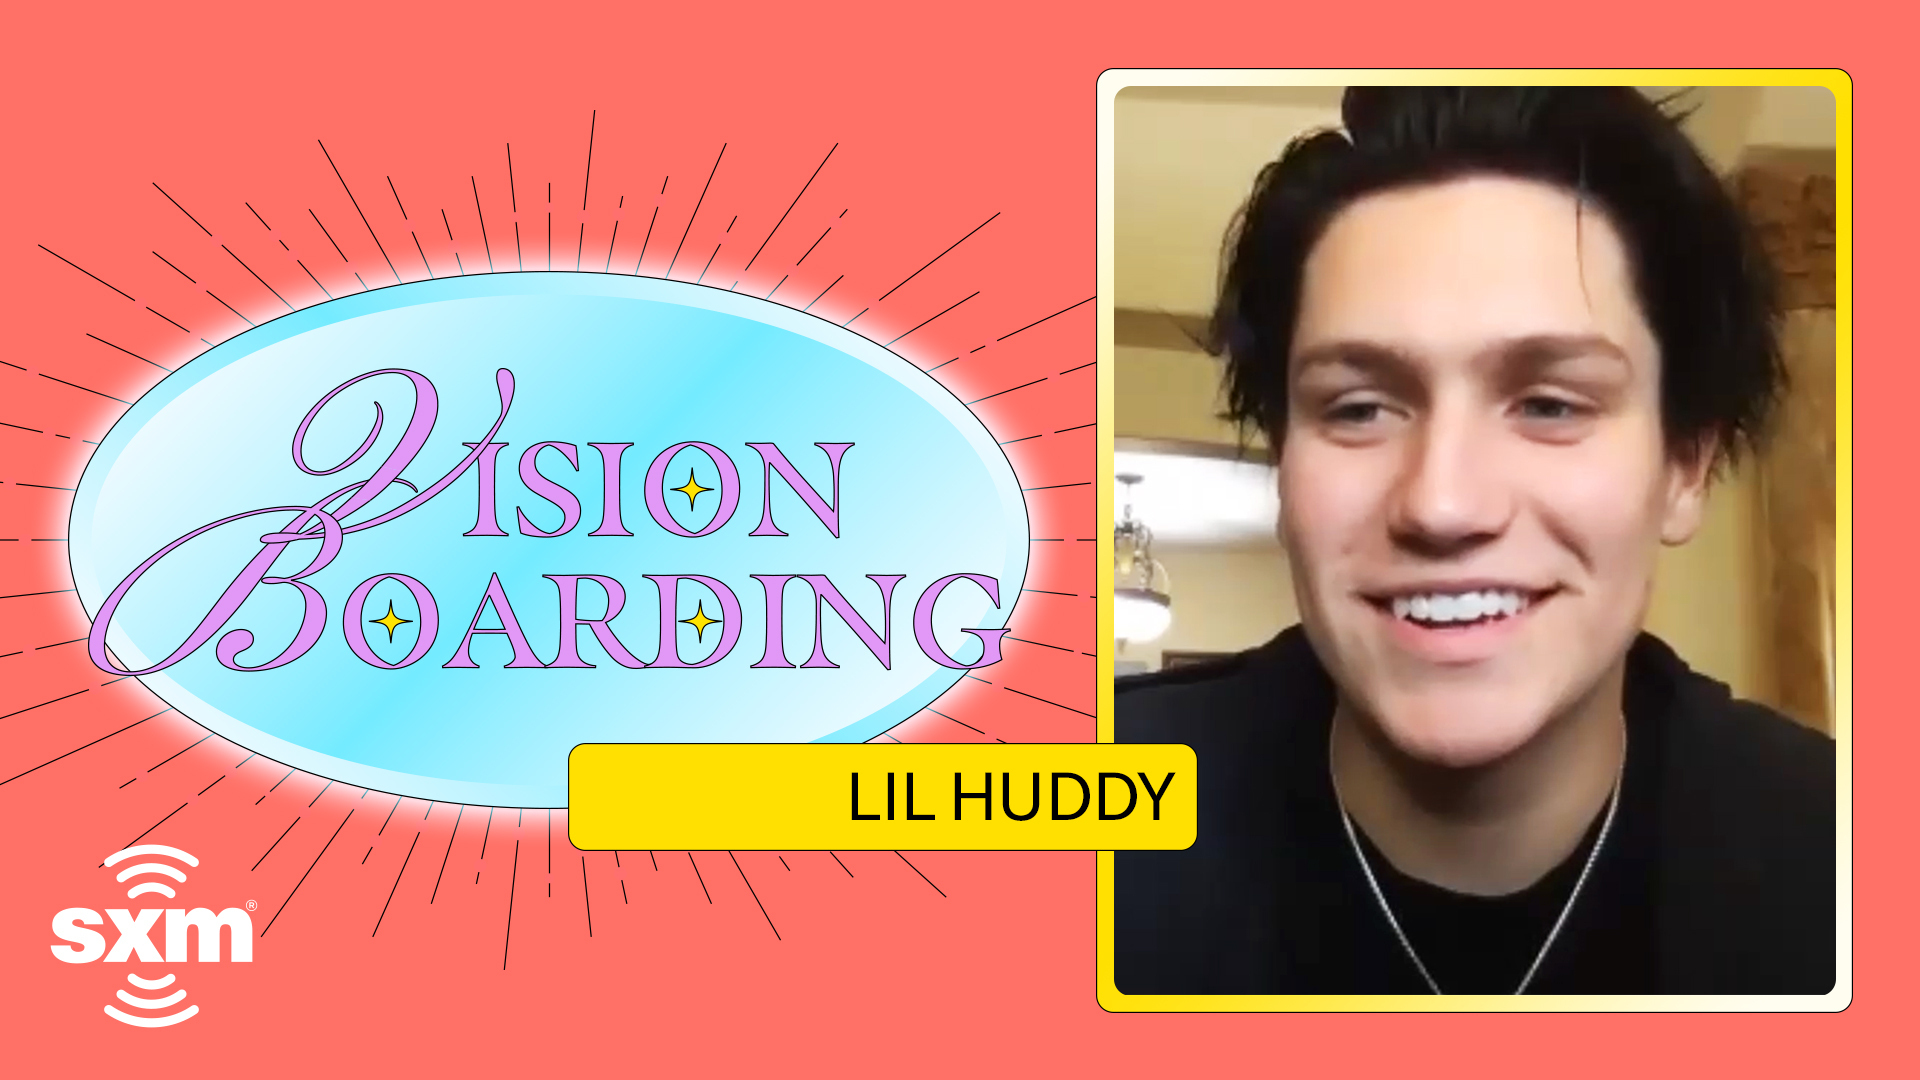 SiriusXM Vision Boarding Lil Huddy